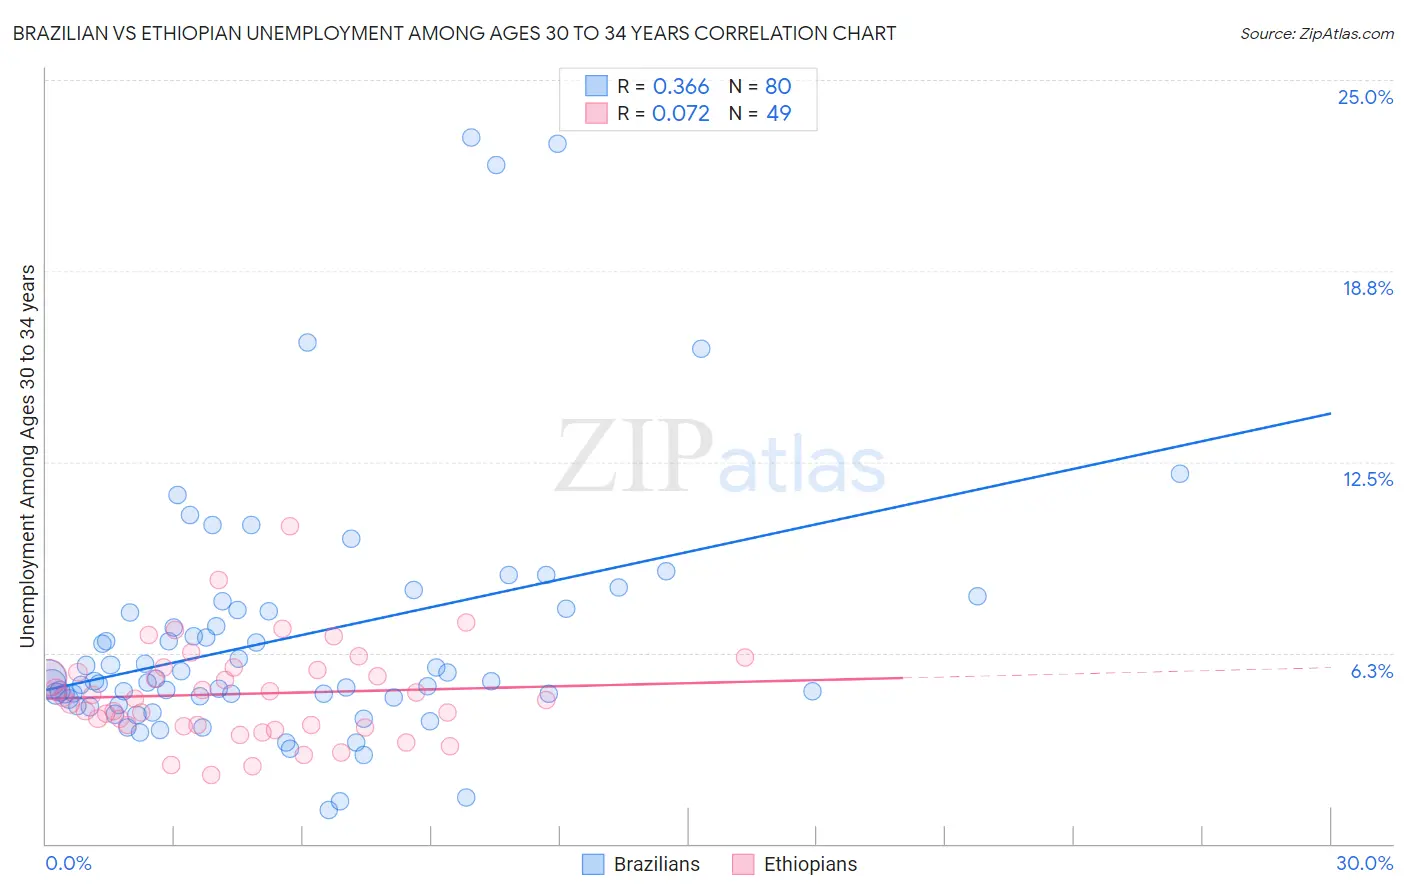 Brazilian vs Ethiopian Unemployment Among Ages 30 to 34 years